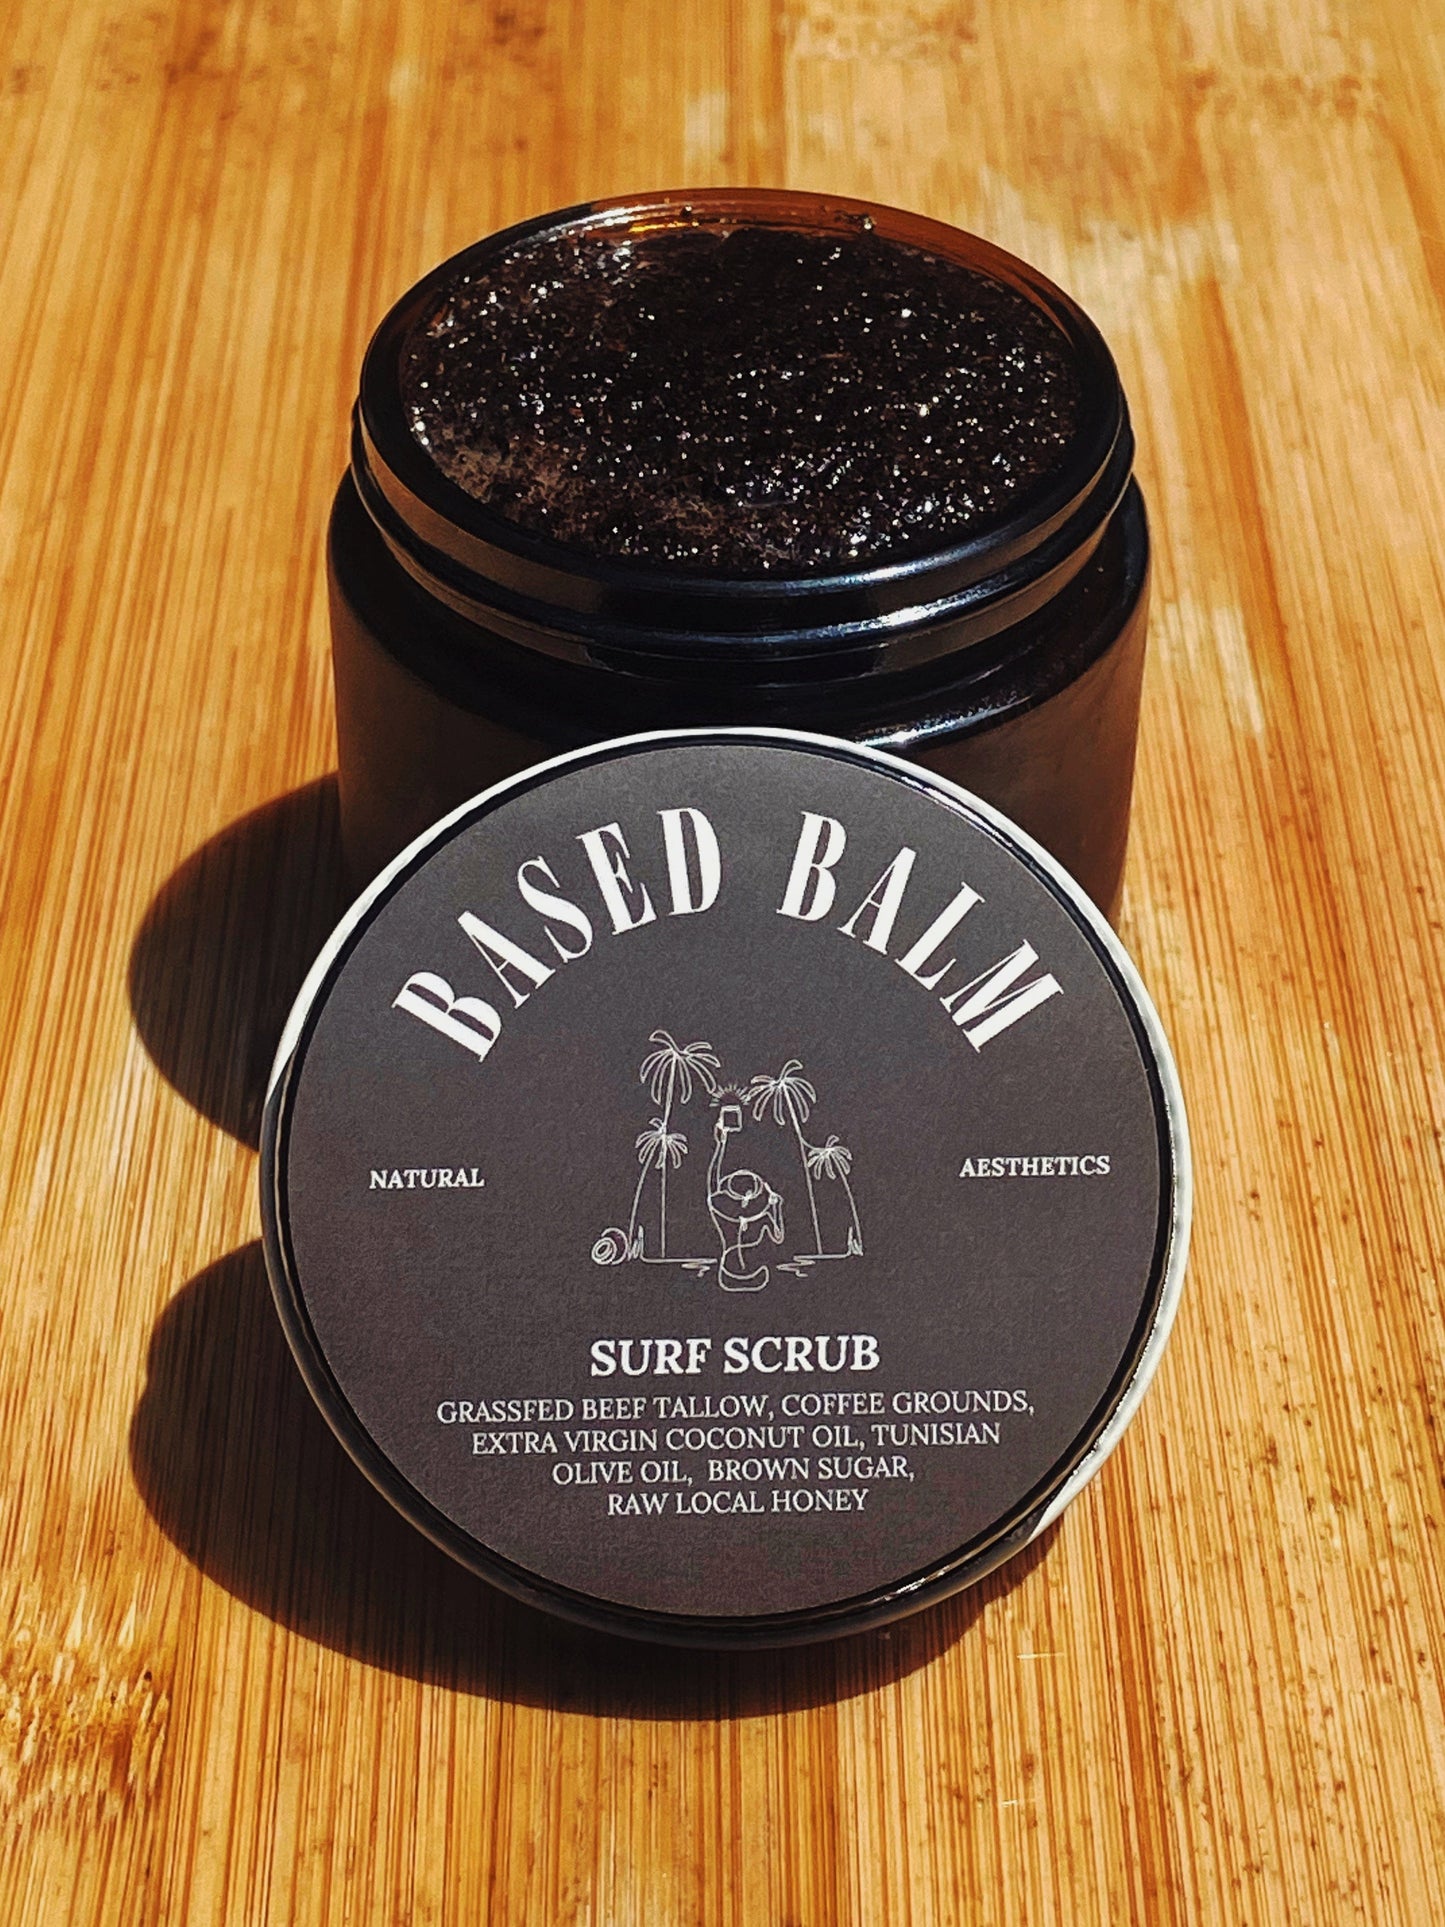 Based Balm’s Surf Scrub (Tallow Coffee Exfoliant)